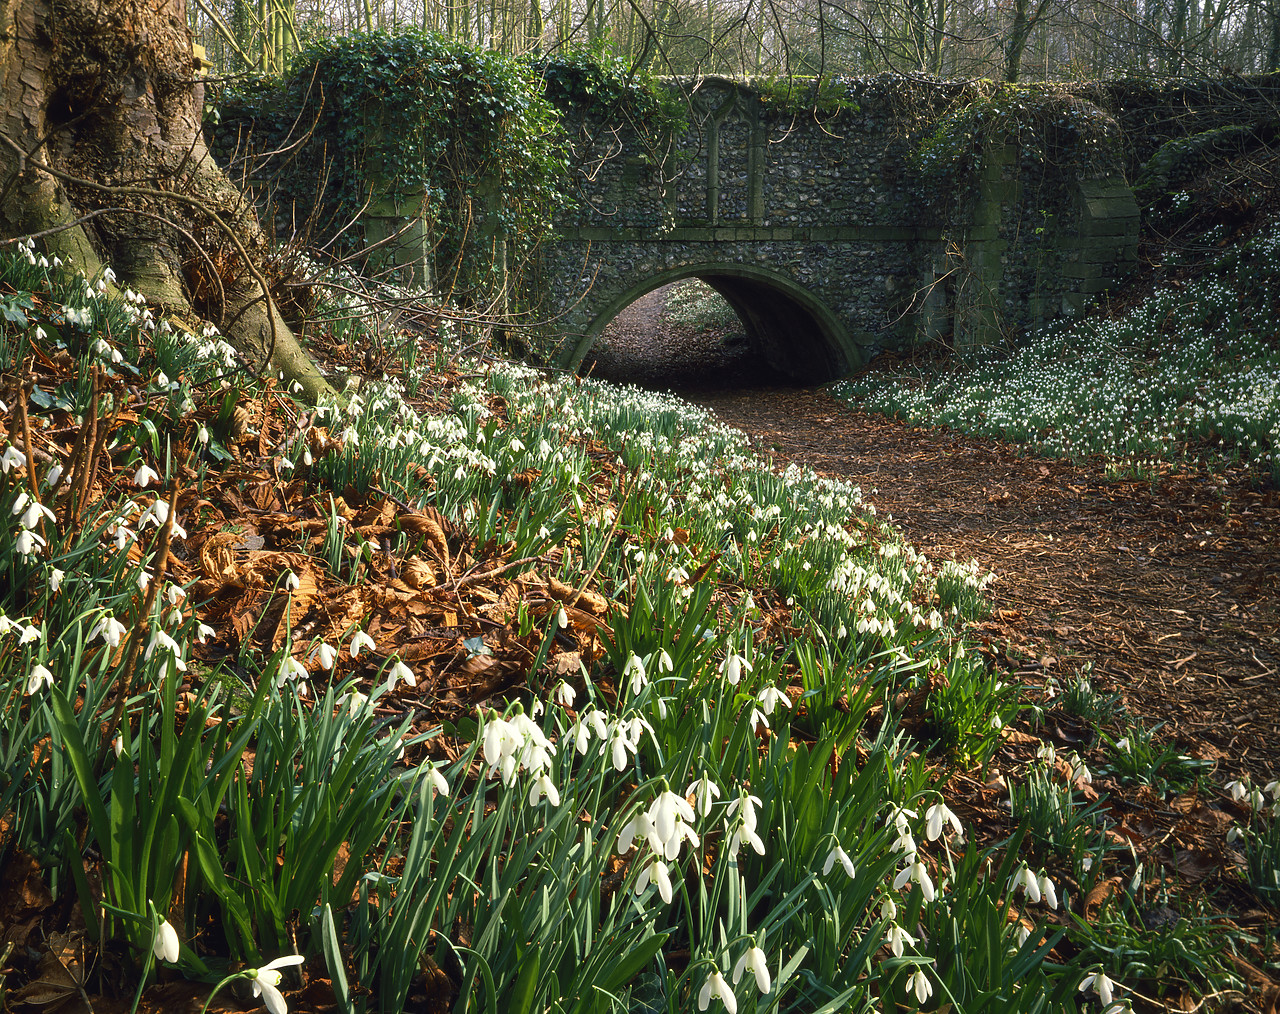 #913266-2 - Snowdrops & Stone Bridge, Little Walsingham, Norfolk, England